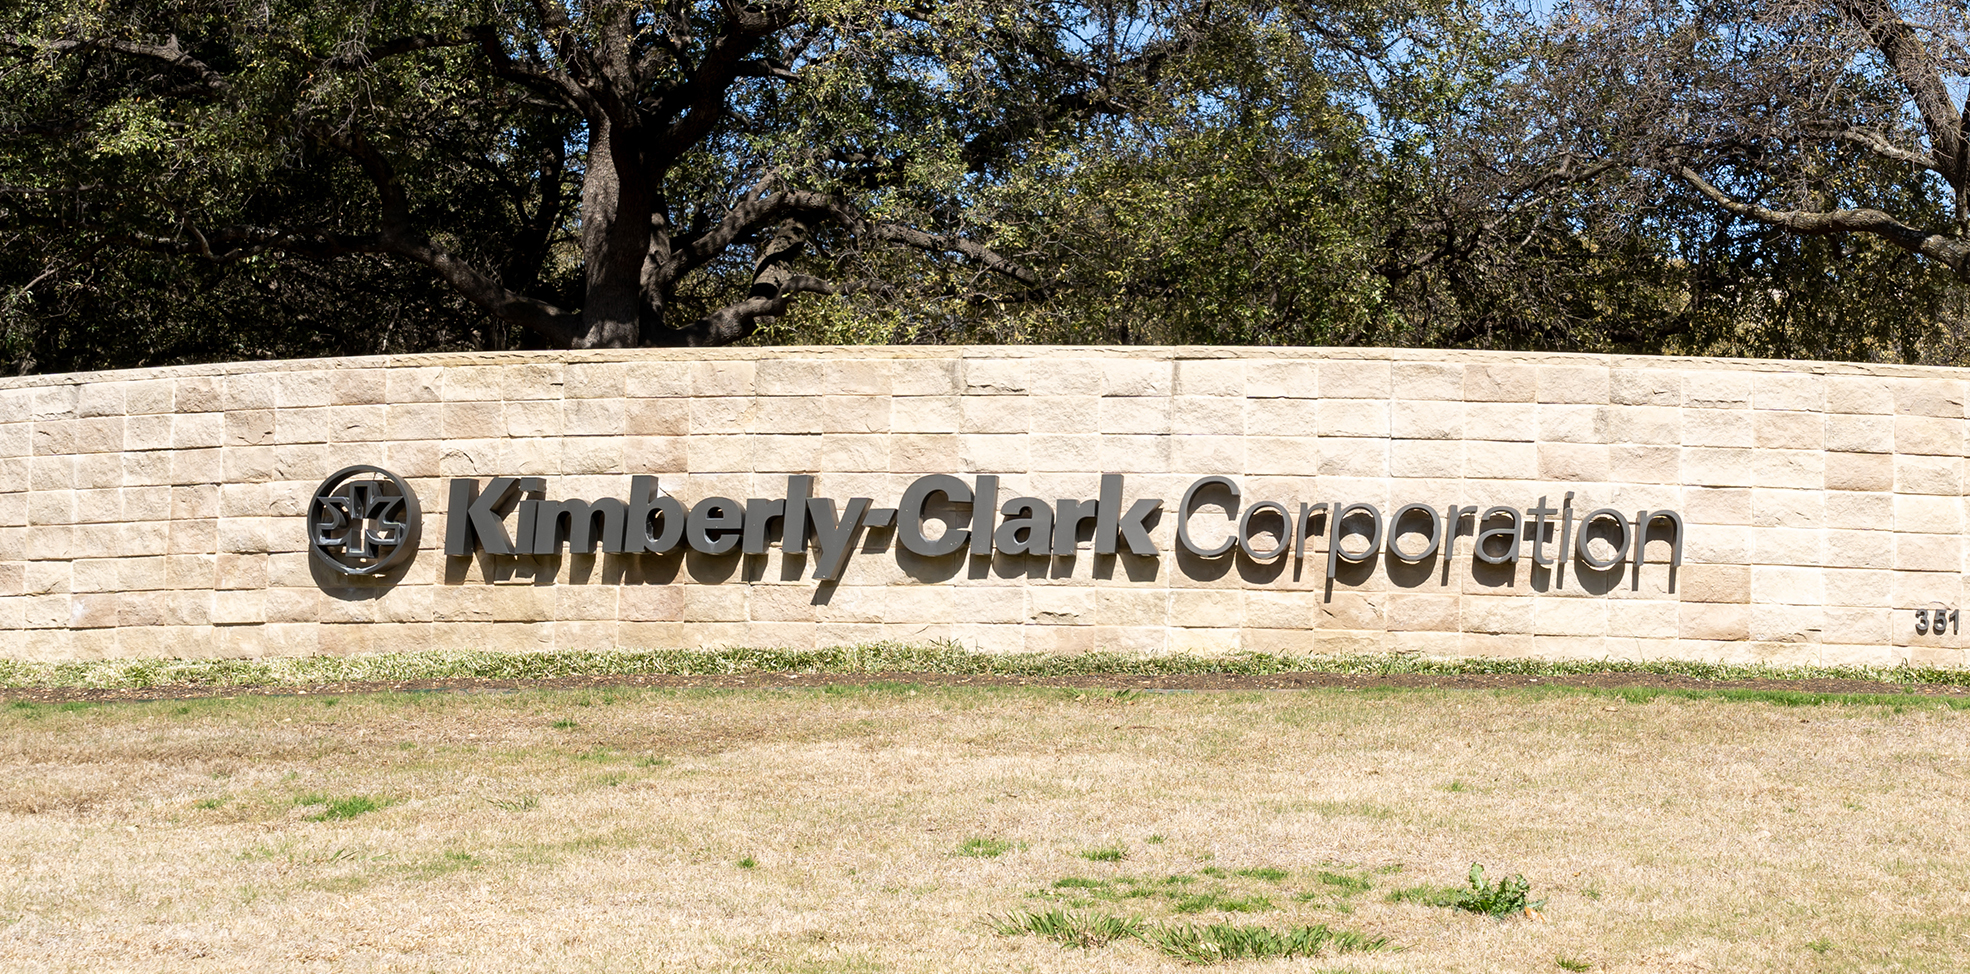 Irving,  Texas, USA - March 20, 2022: Kimberly-Clark Corporation